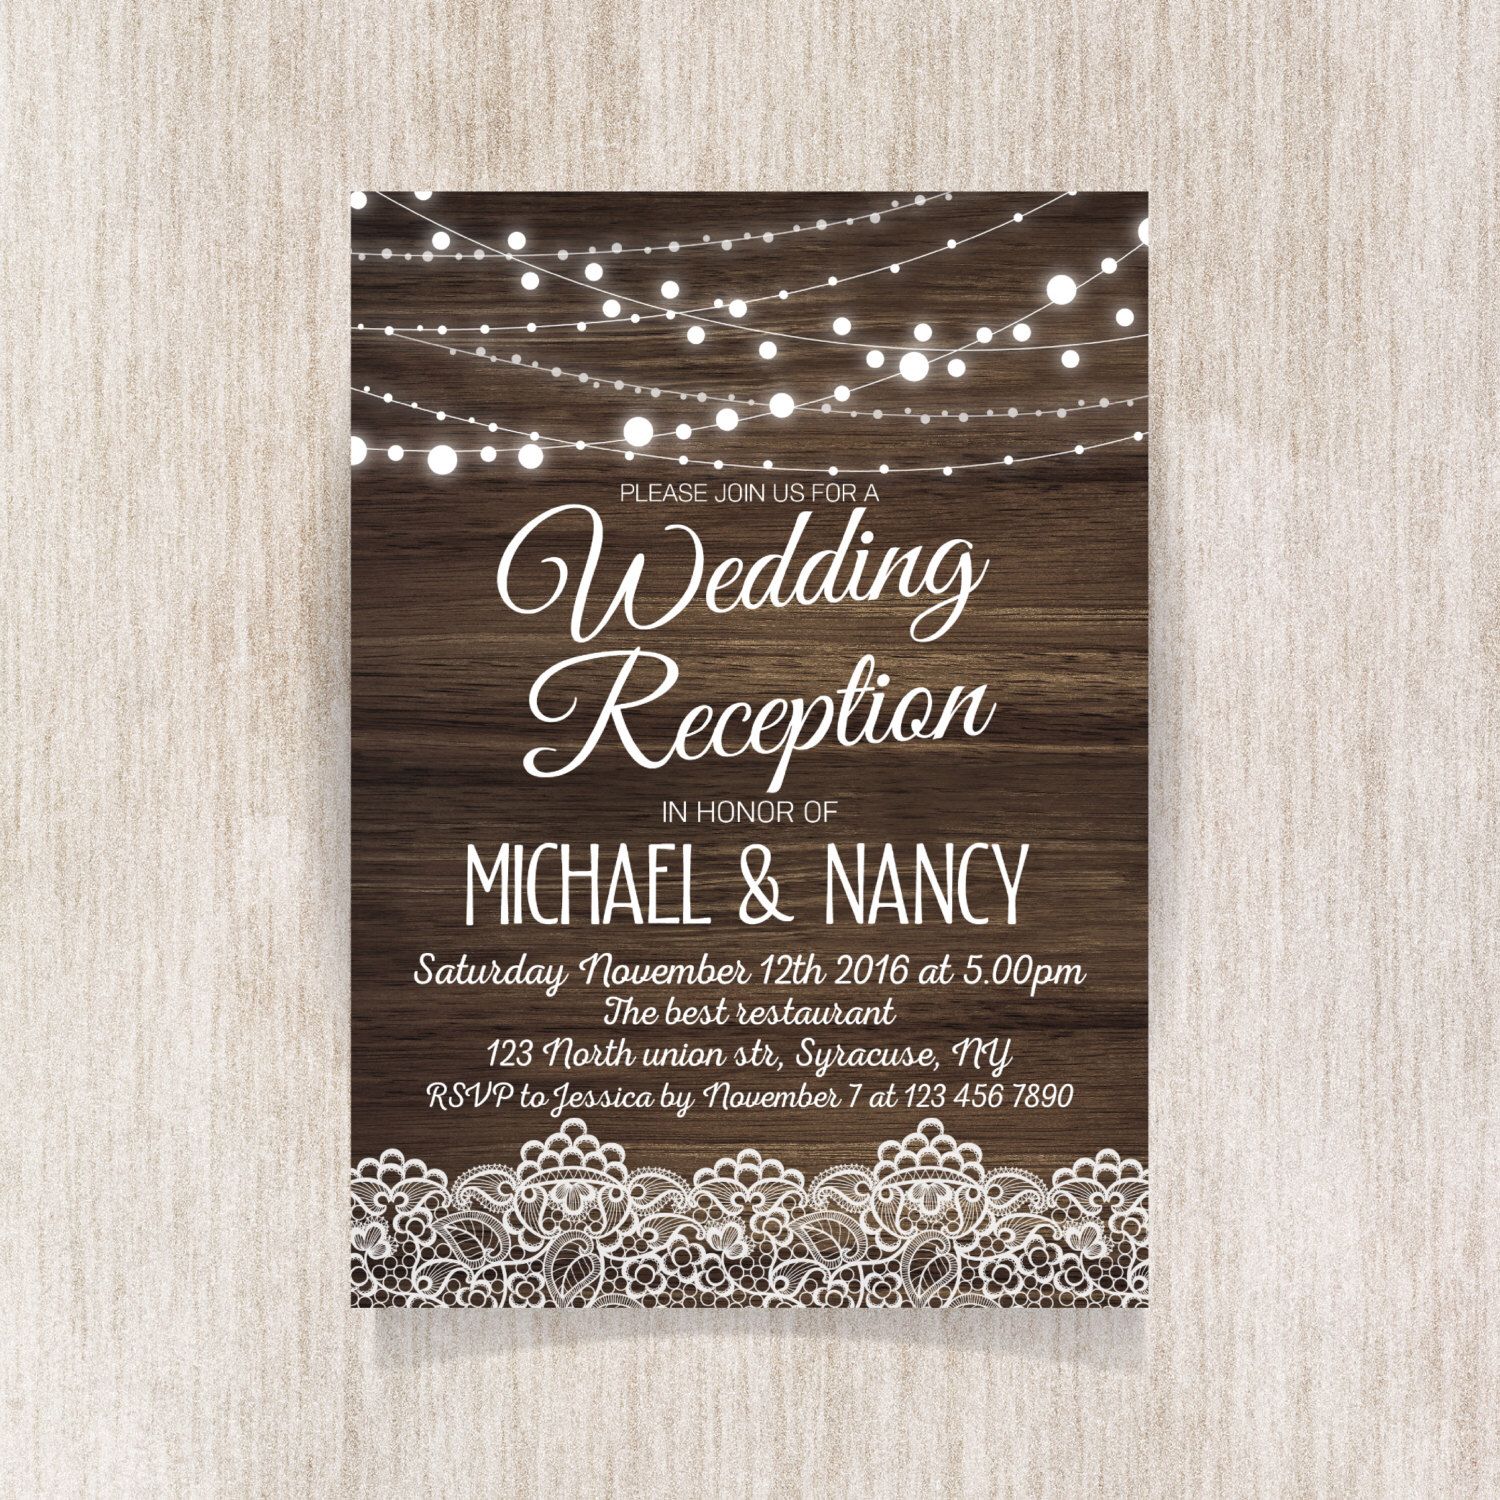 Rustic Wedding Reception Invitation. Wedding Reception